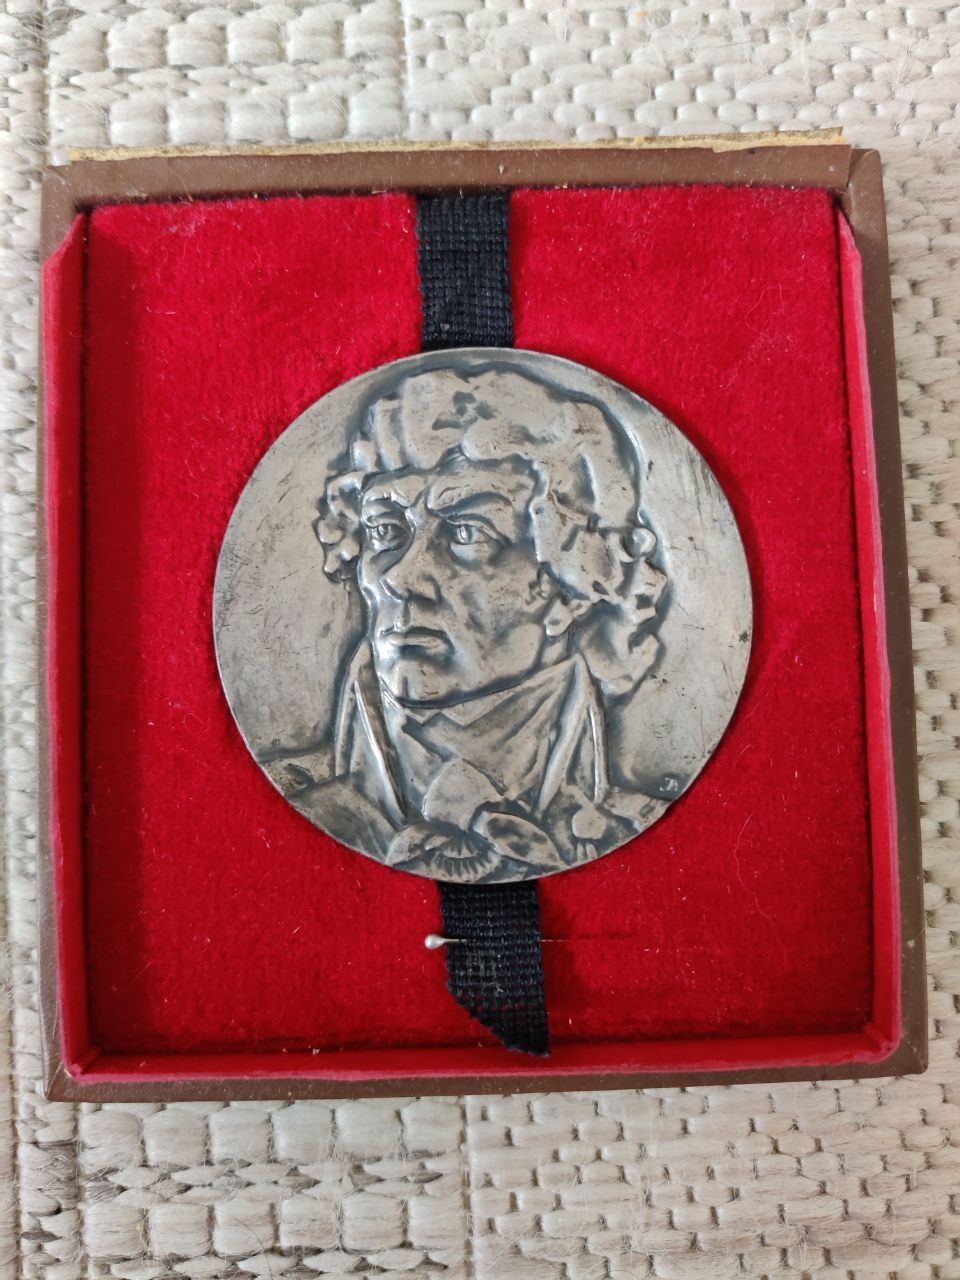 Medal Kościuszko - PTTK Chełm